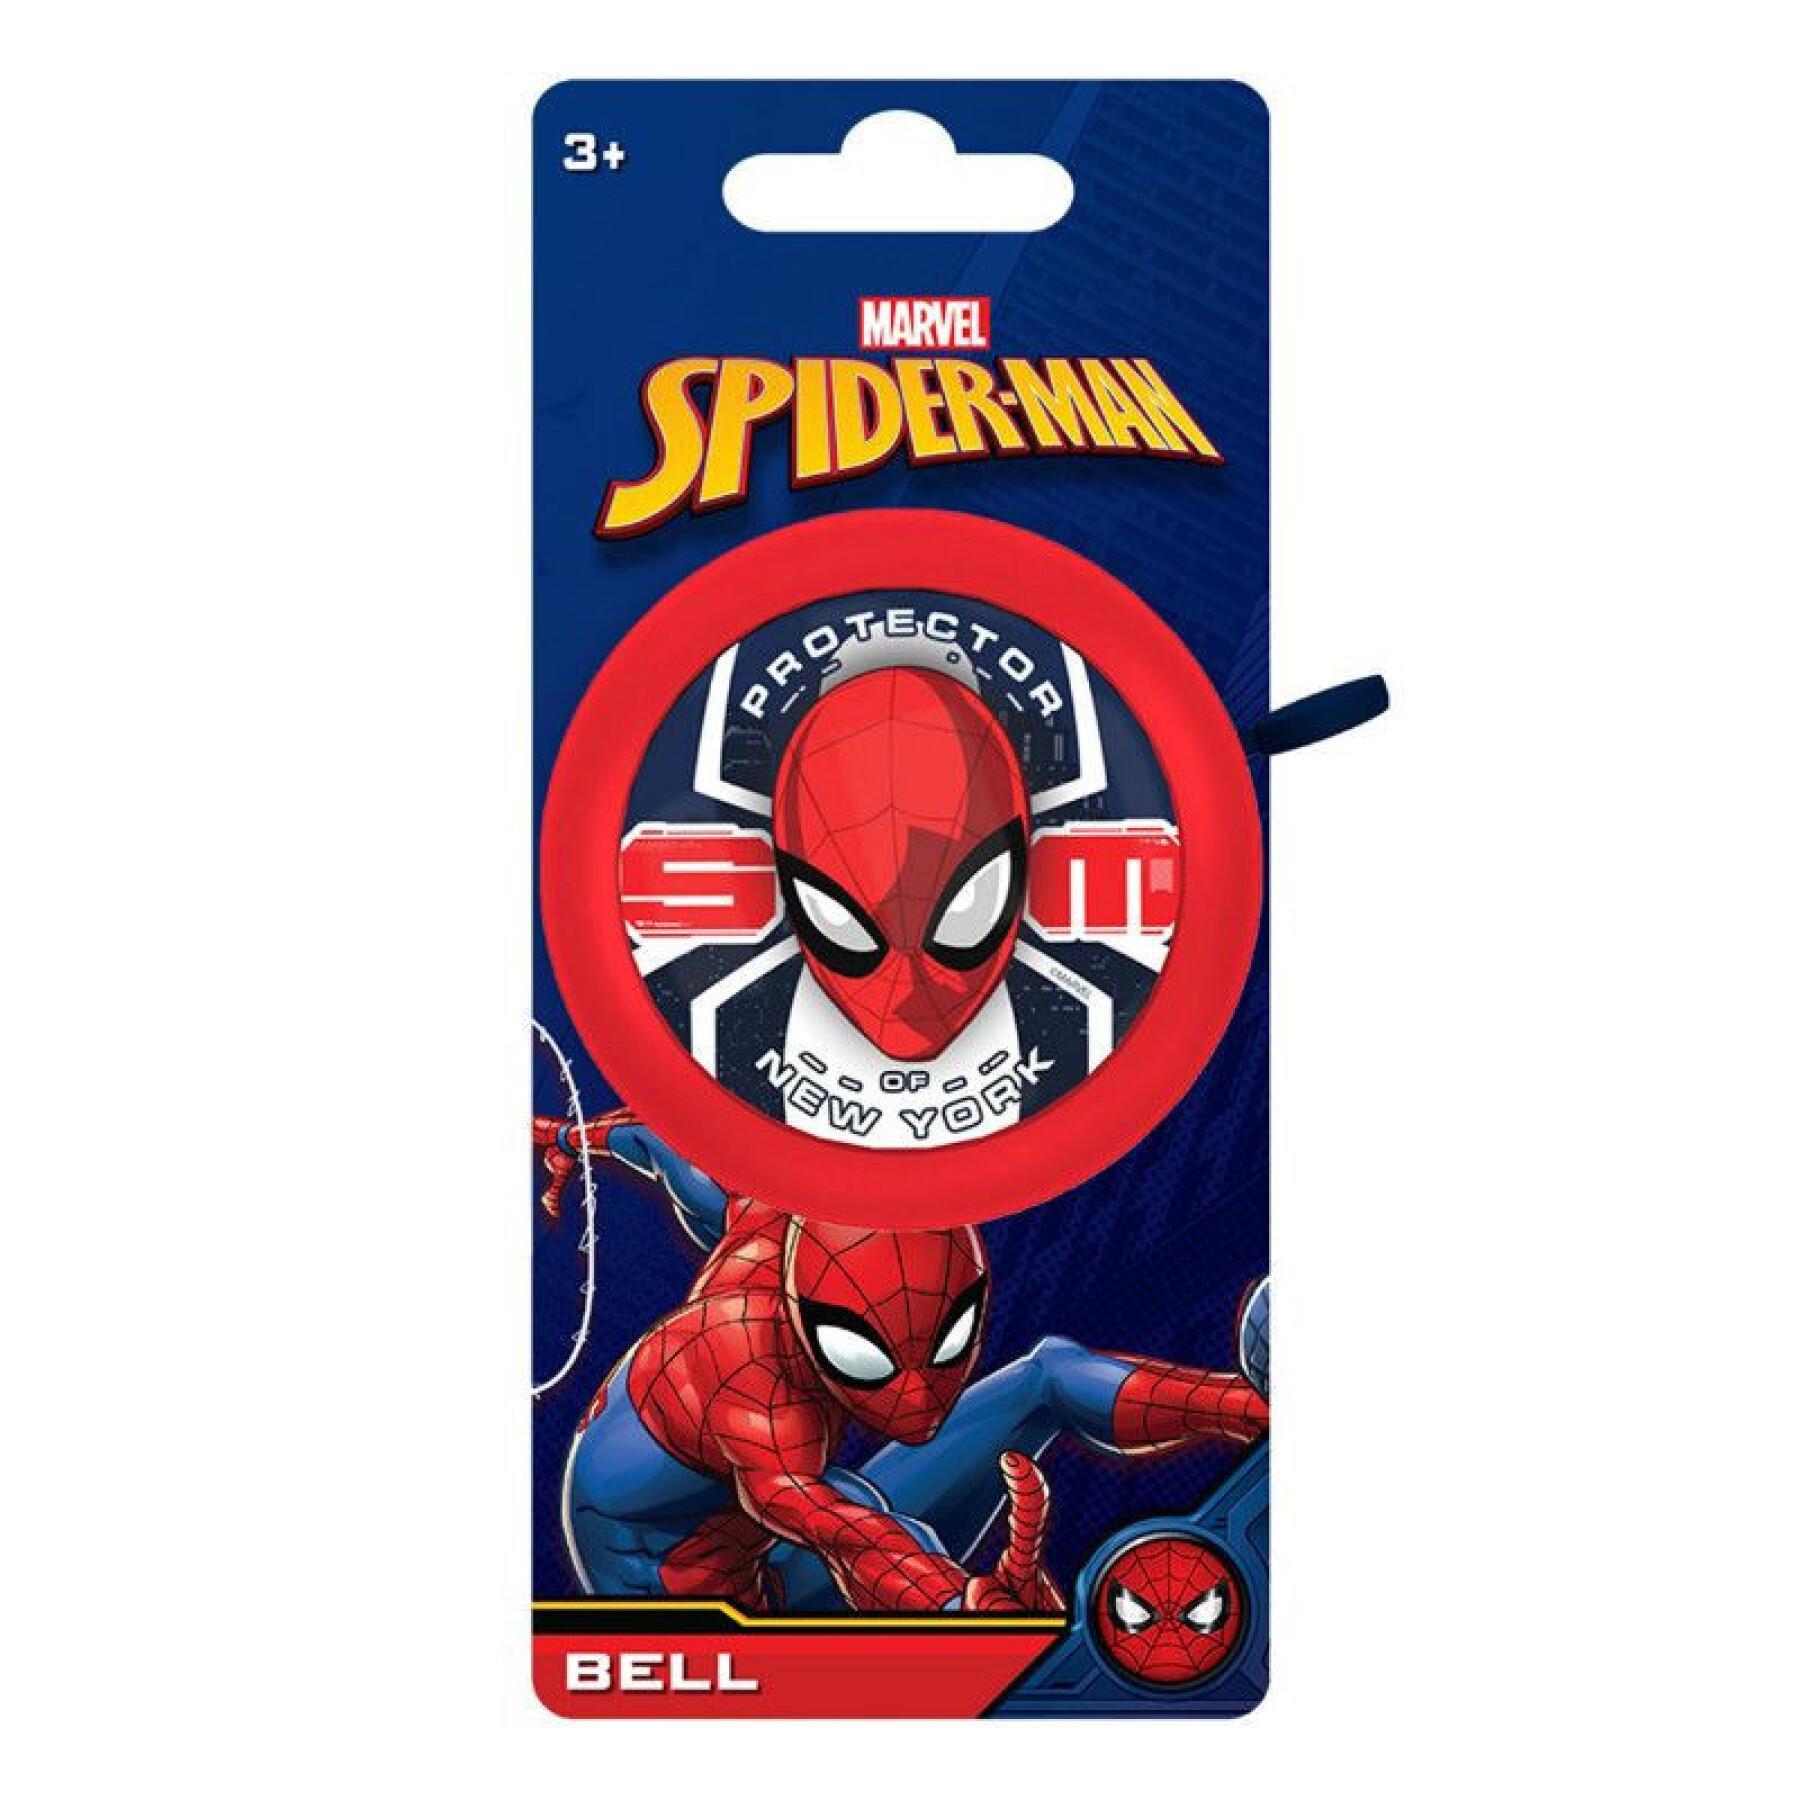 Campana para niños Disney Spiderman